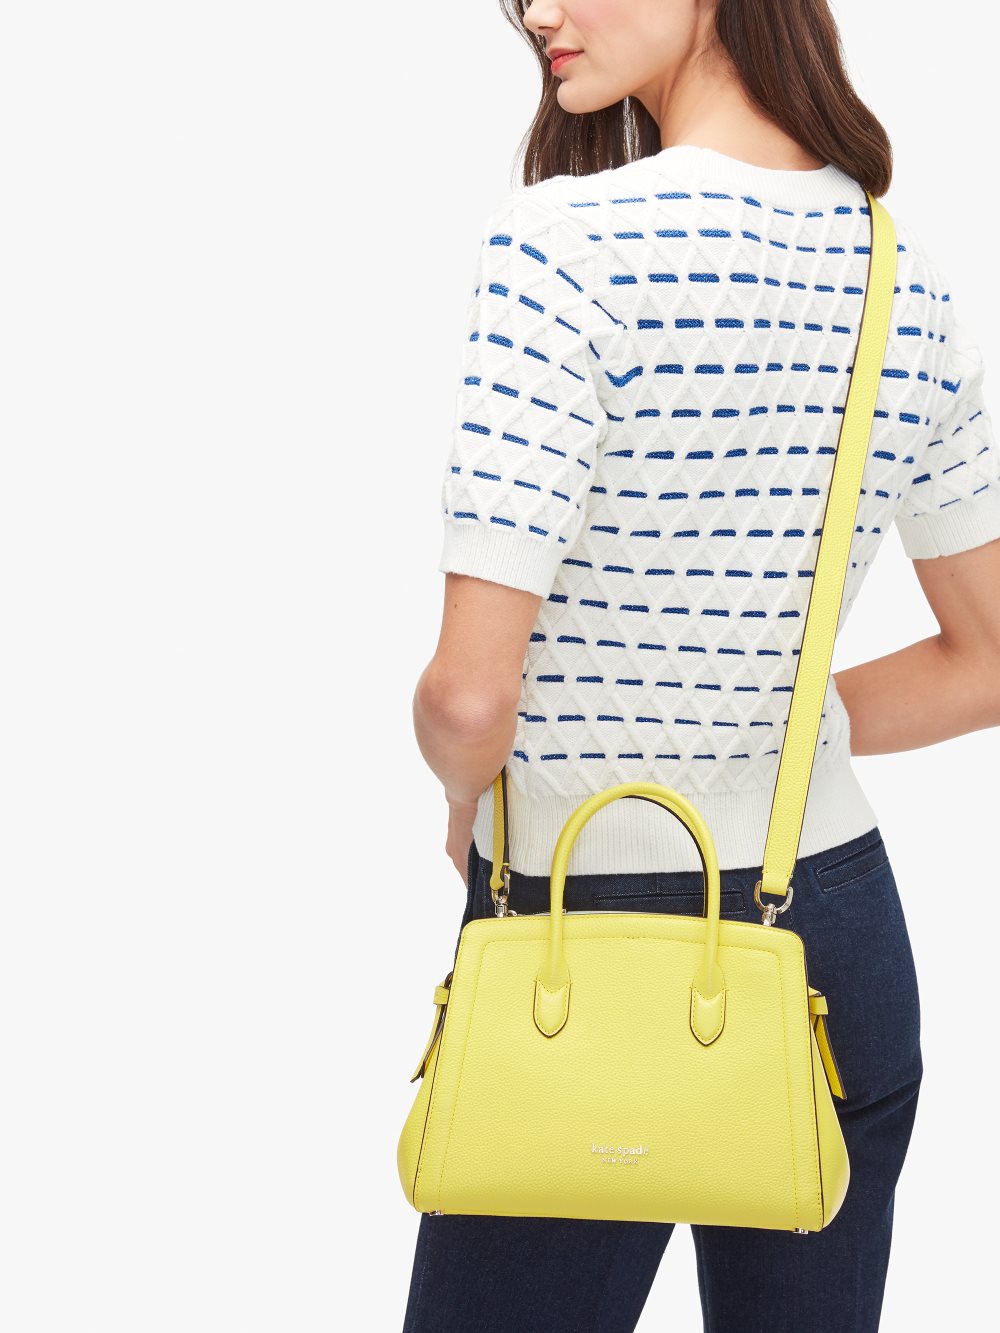 Women's yellow sesame knott medium satchel | Kate Spade